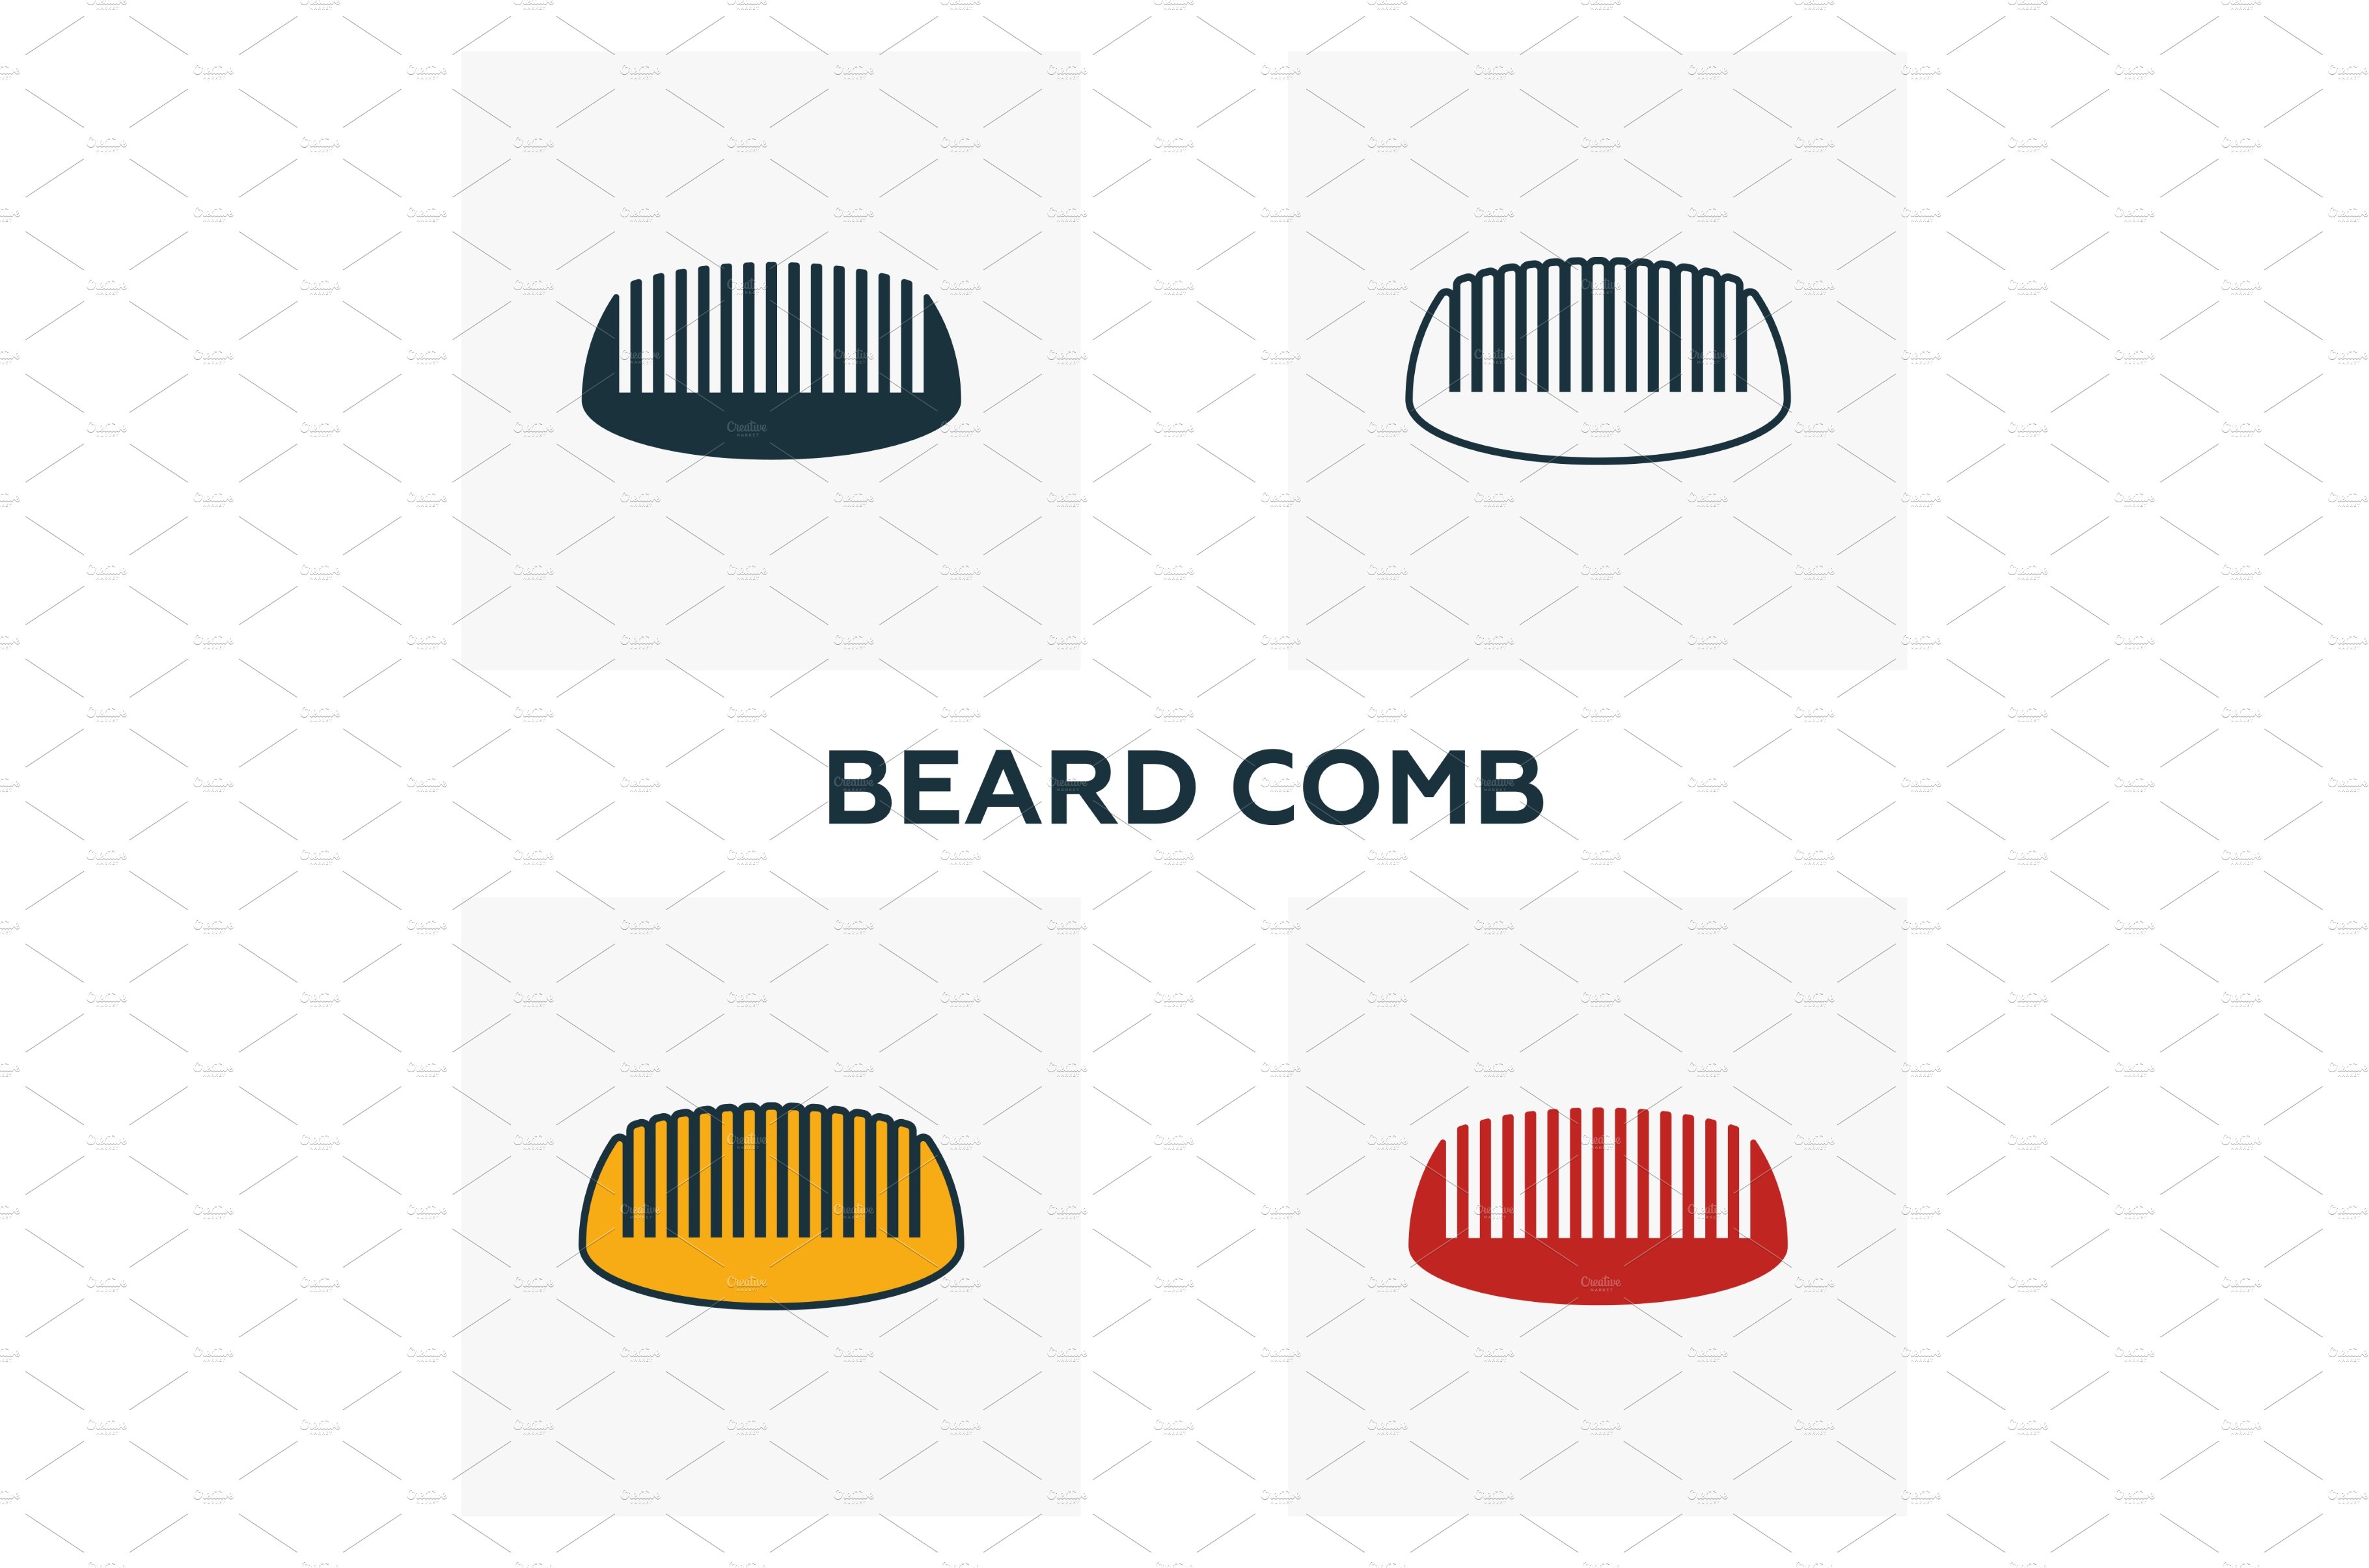 Beard Comb icon set. cover image.